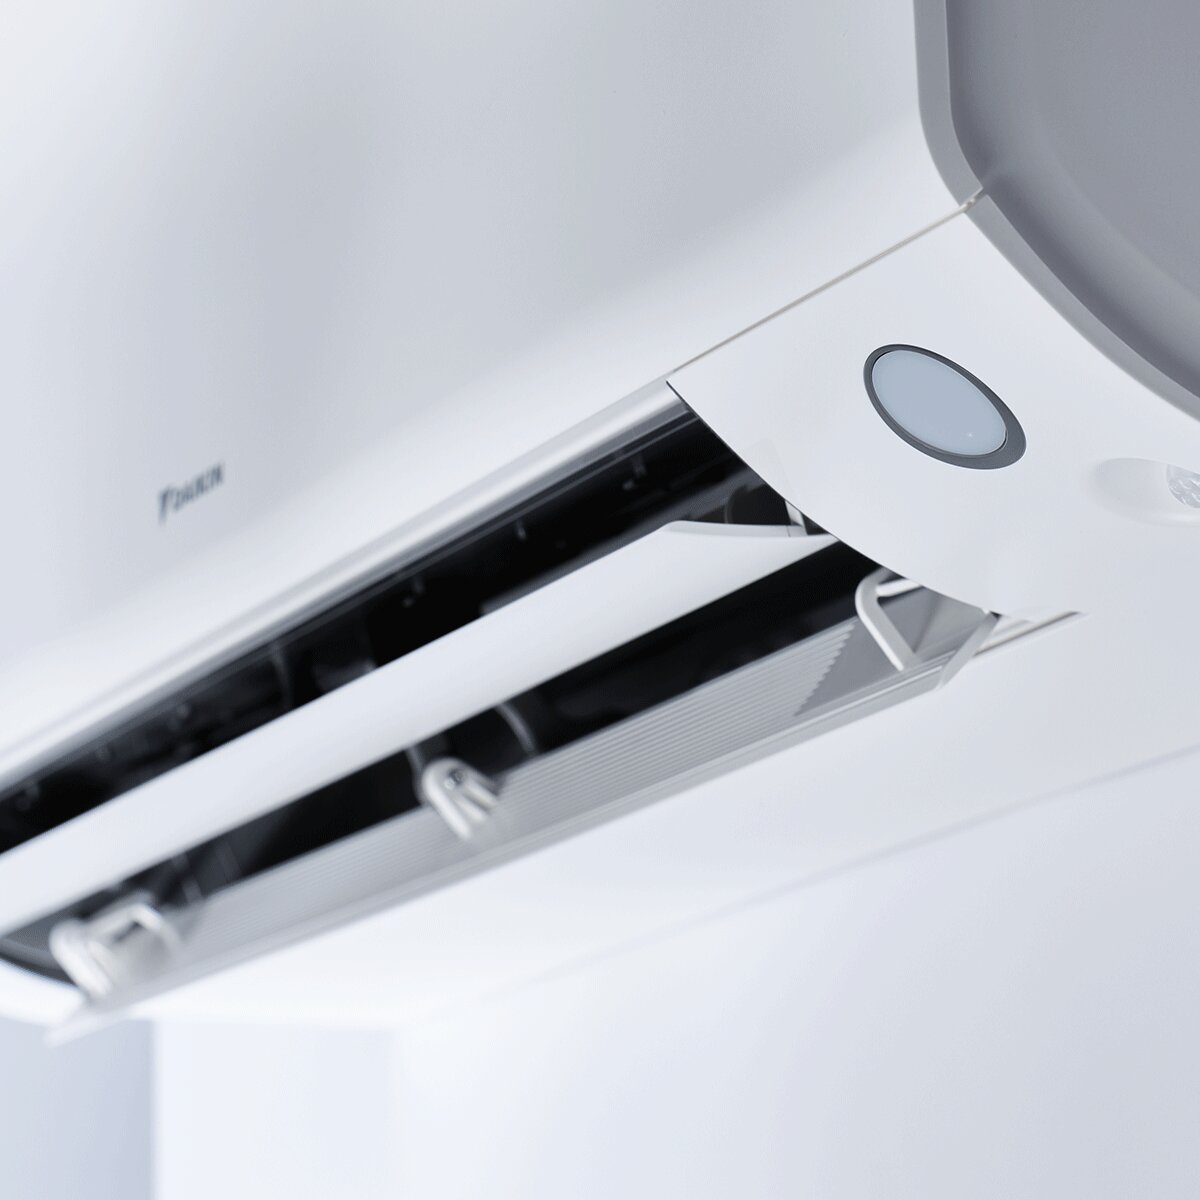 Daikin Perfera All Seasons trial split air conditioner 7000+9000+15000 BTU inverter A++ wifi external unit 6.8 kW